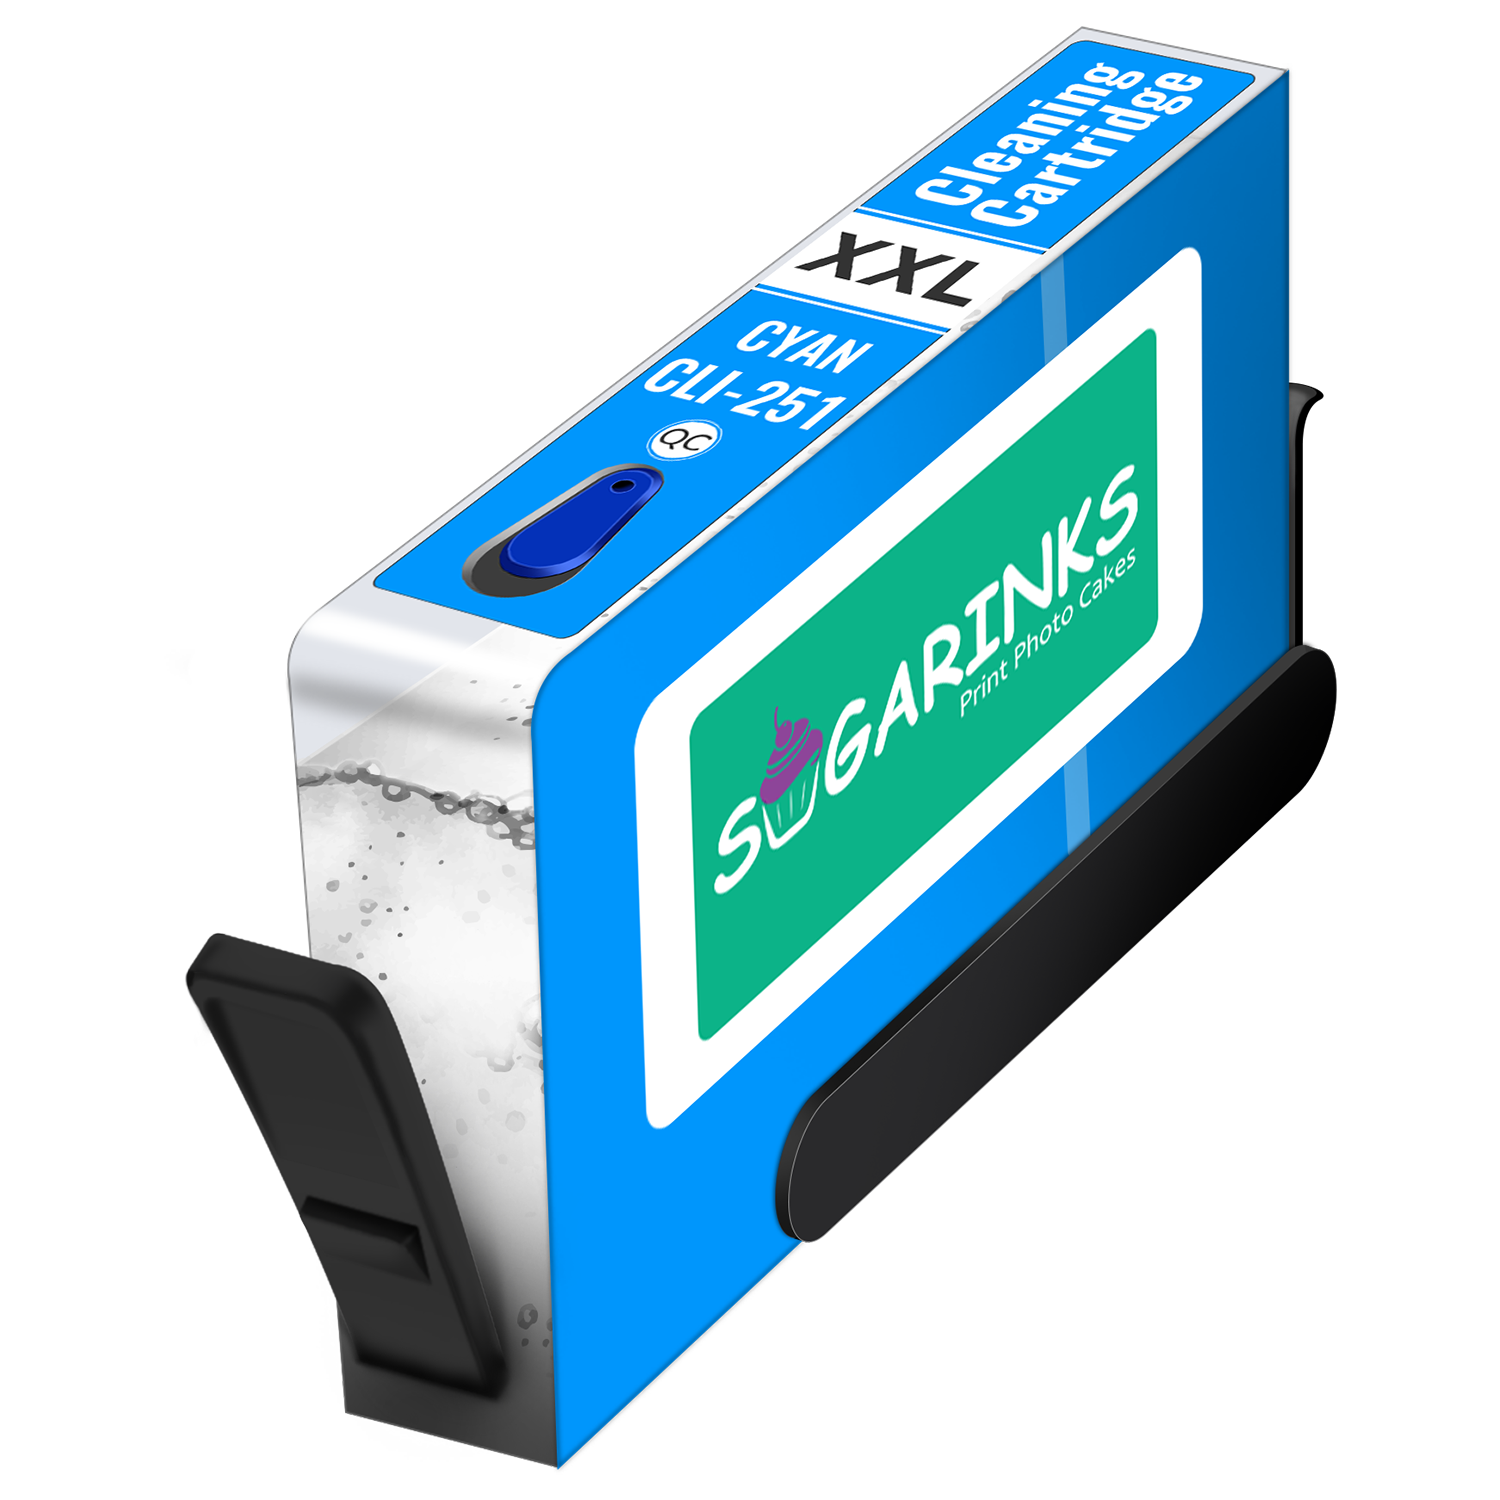 Sugarinks Edible Cleaning Cartridge CLI-251XL for Canon Edible Printer – Cyan